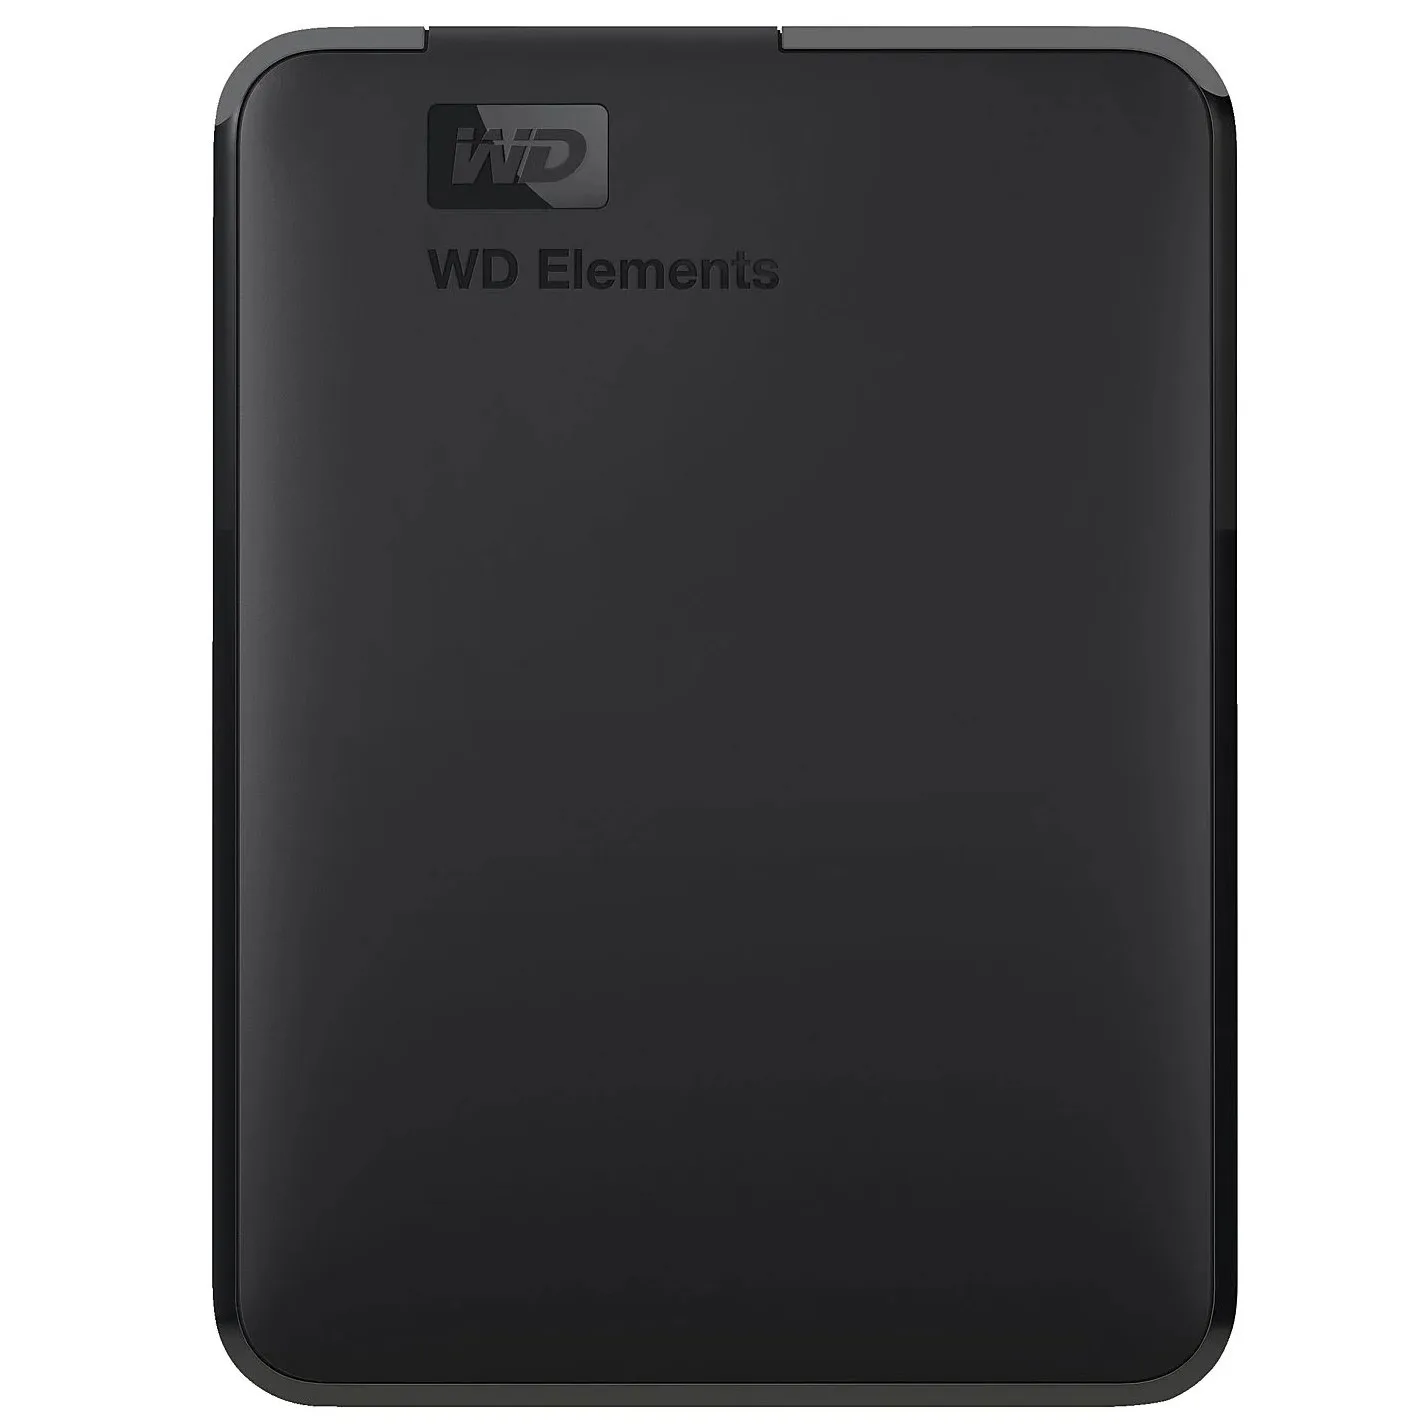 WD Elements™ 2 TB HDD externe Festplatte ist 2,5 Zoll groß